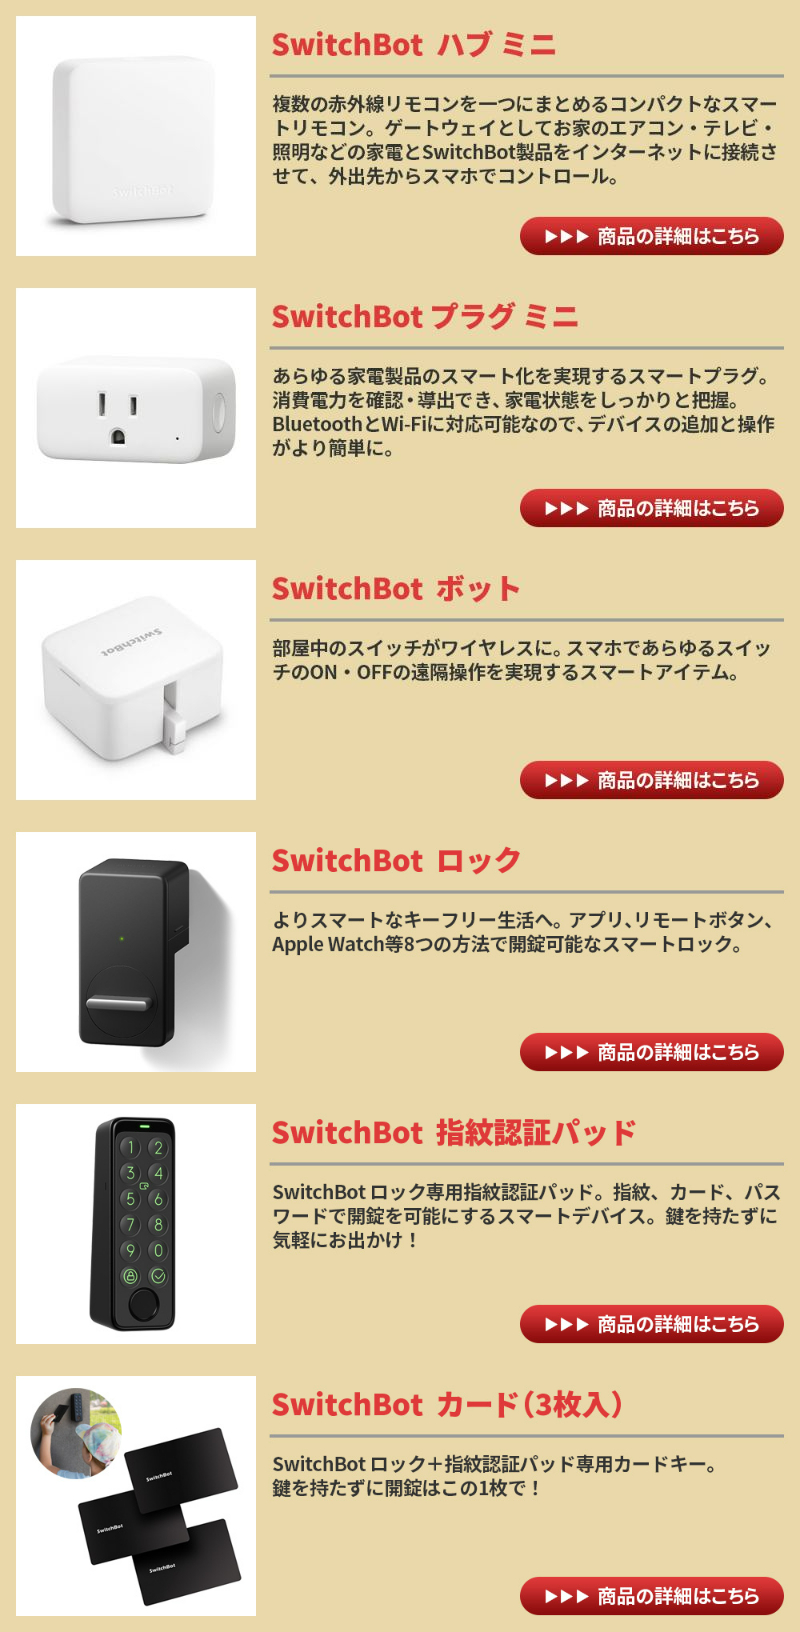 switchbot スマートロック 指紋認証パッド セット【セットでお得